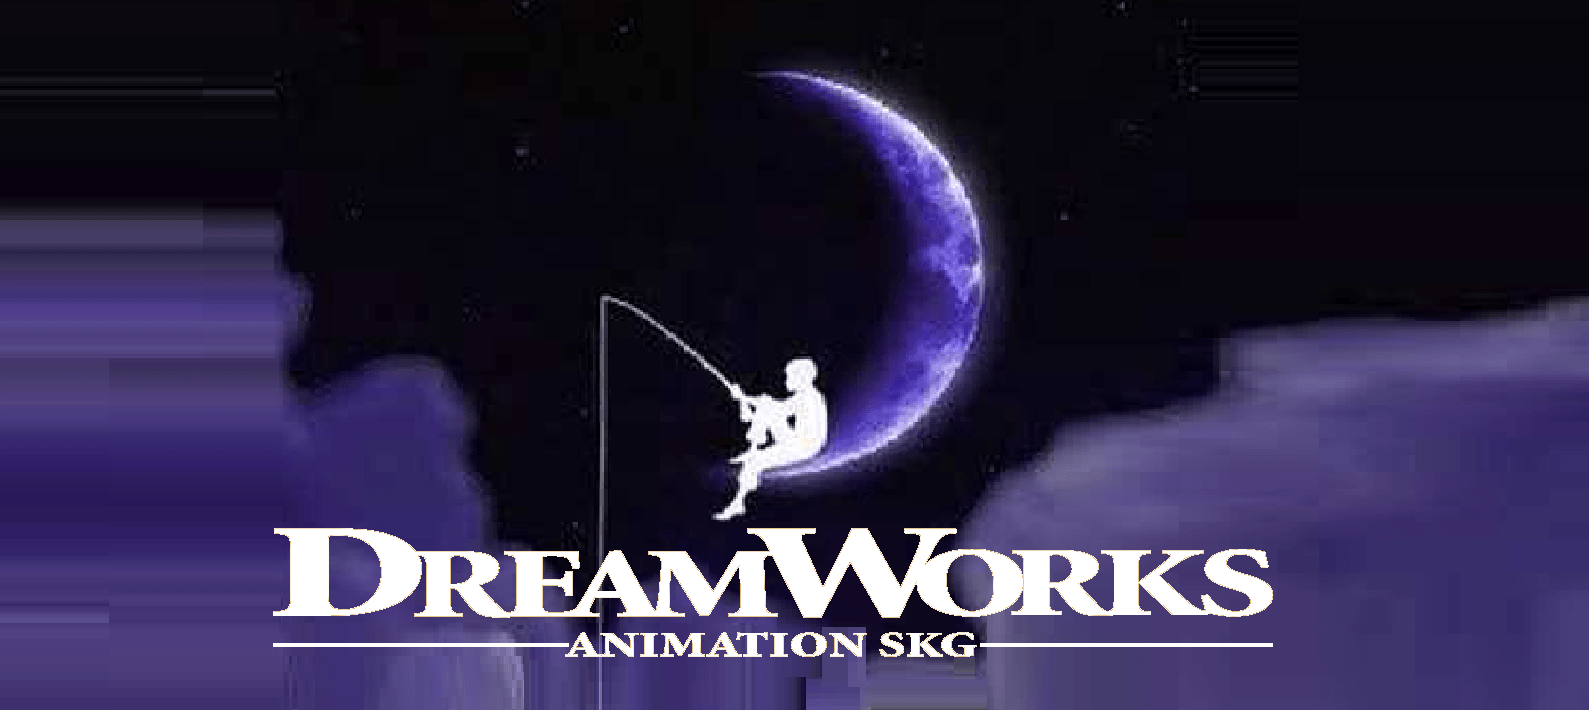 DreamWorks 2018 Logo - Image - DreamWorks Animation logo (purple version).png | The Idea ...